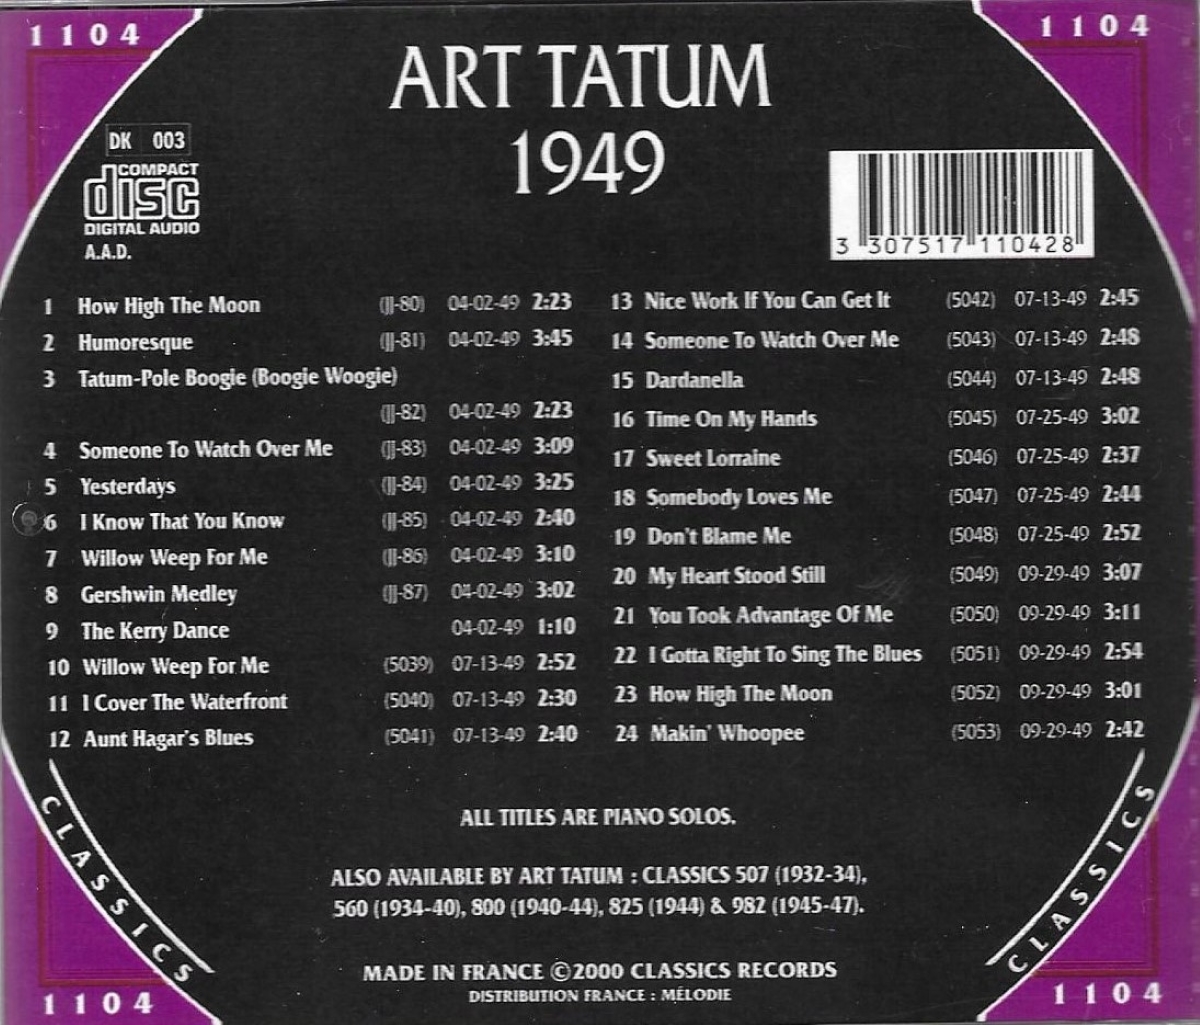 The Chronological Art Tatum-1949